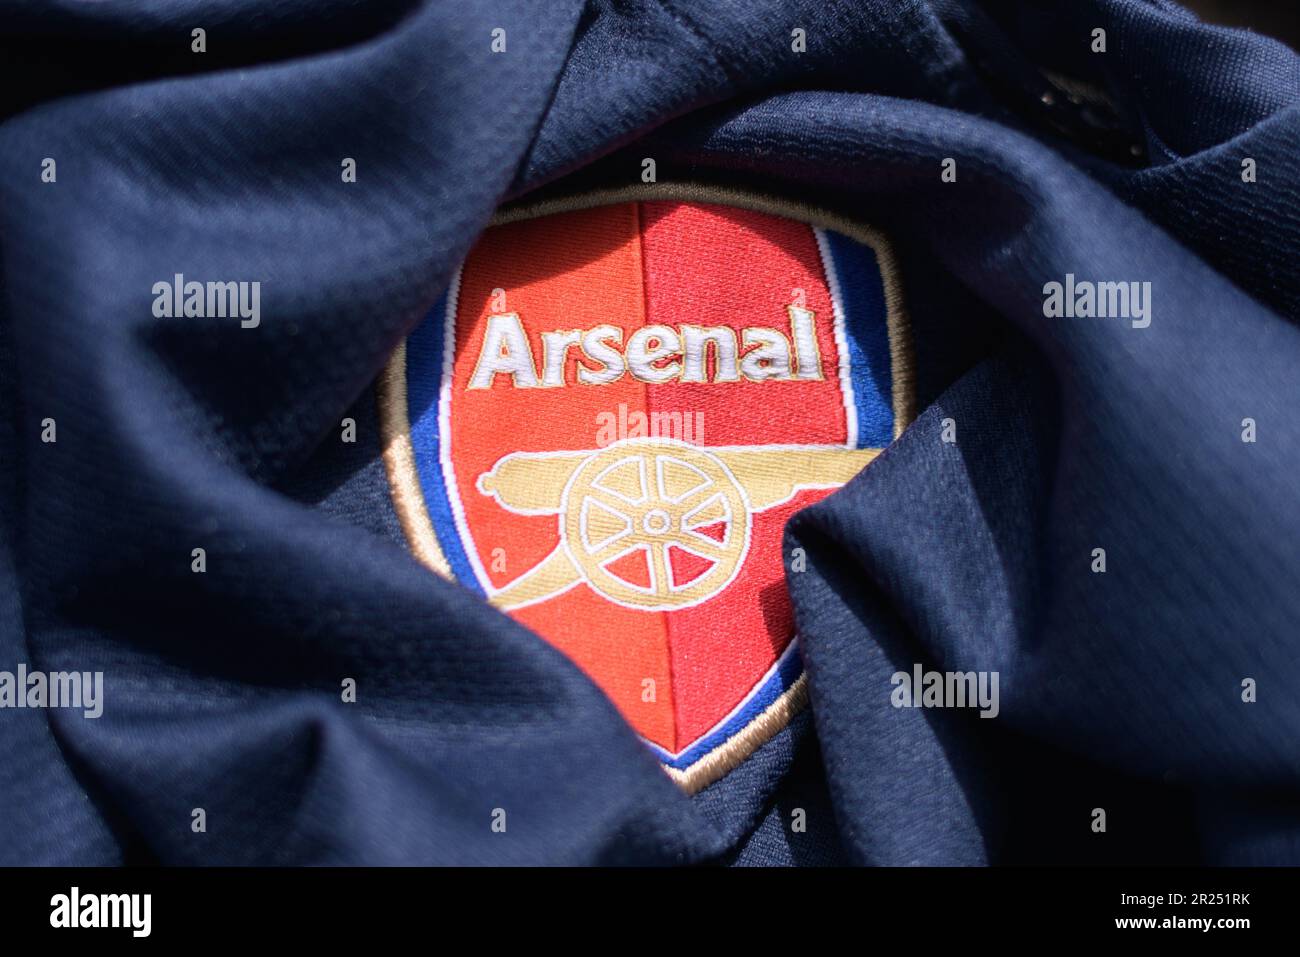 Arsenal Football club badge on shirt Stock Photo